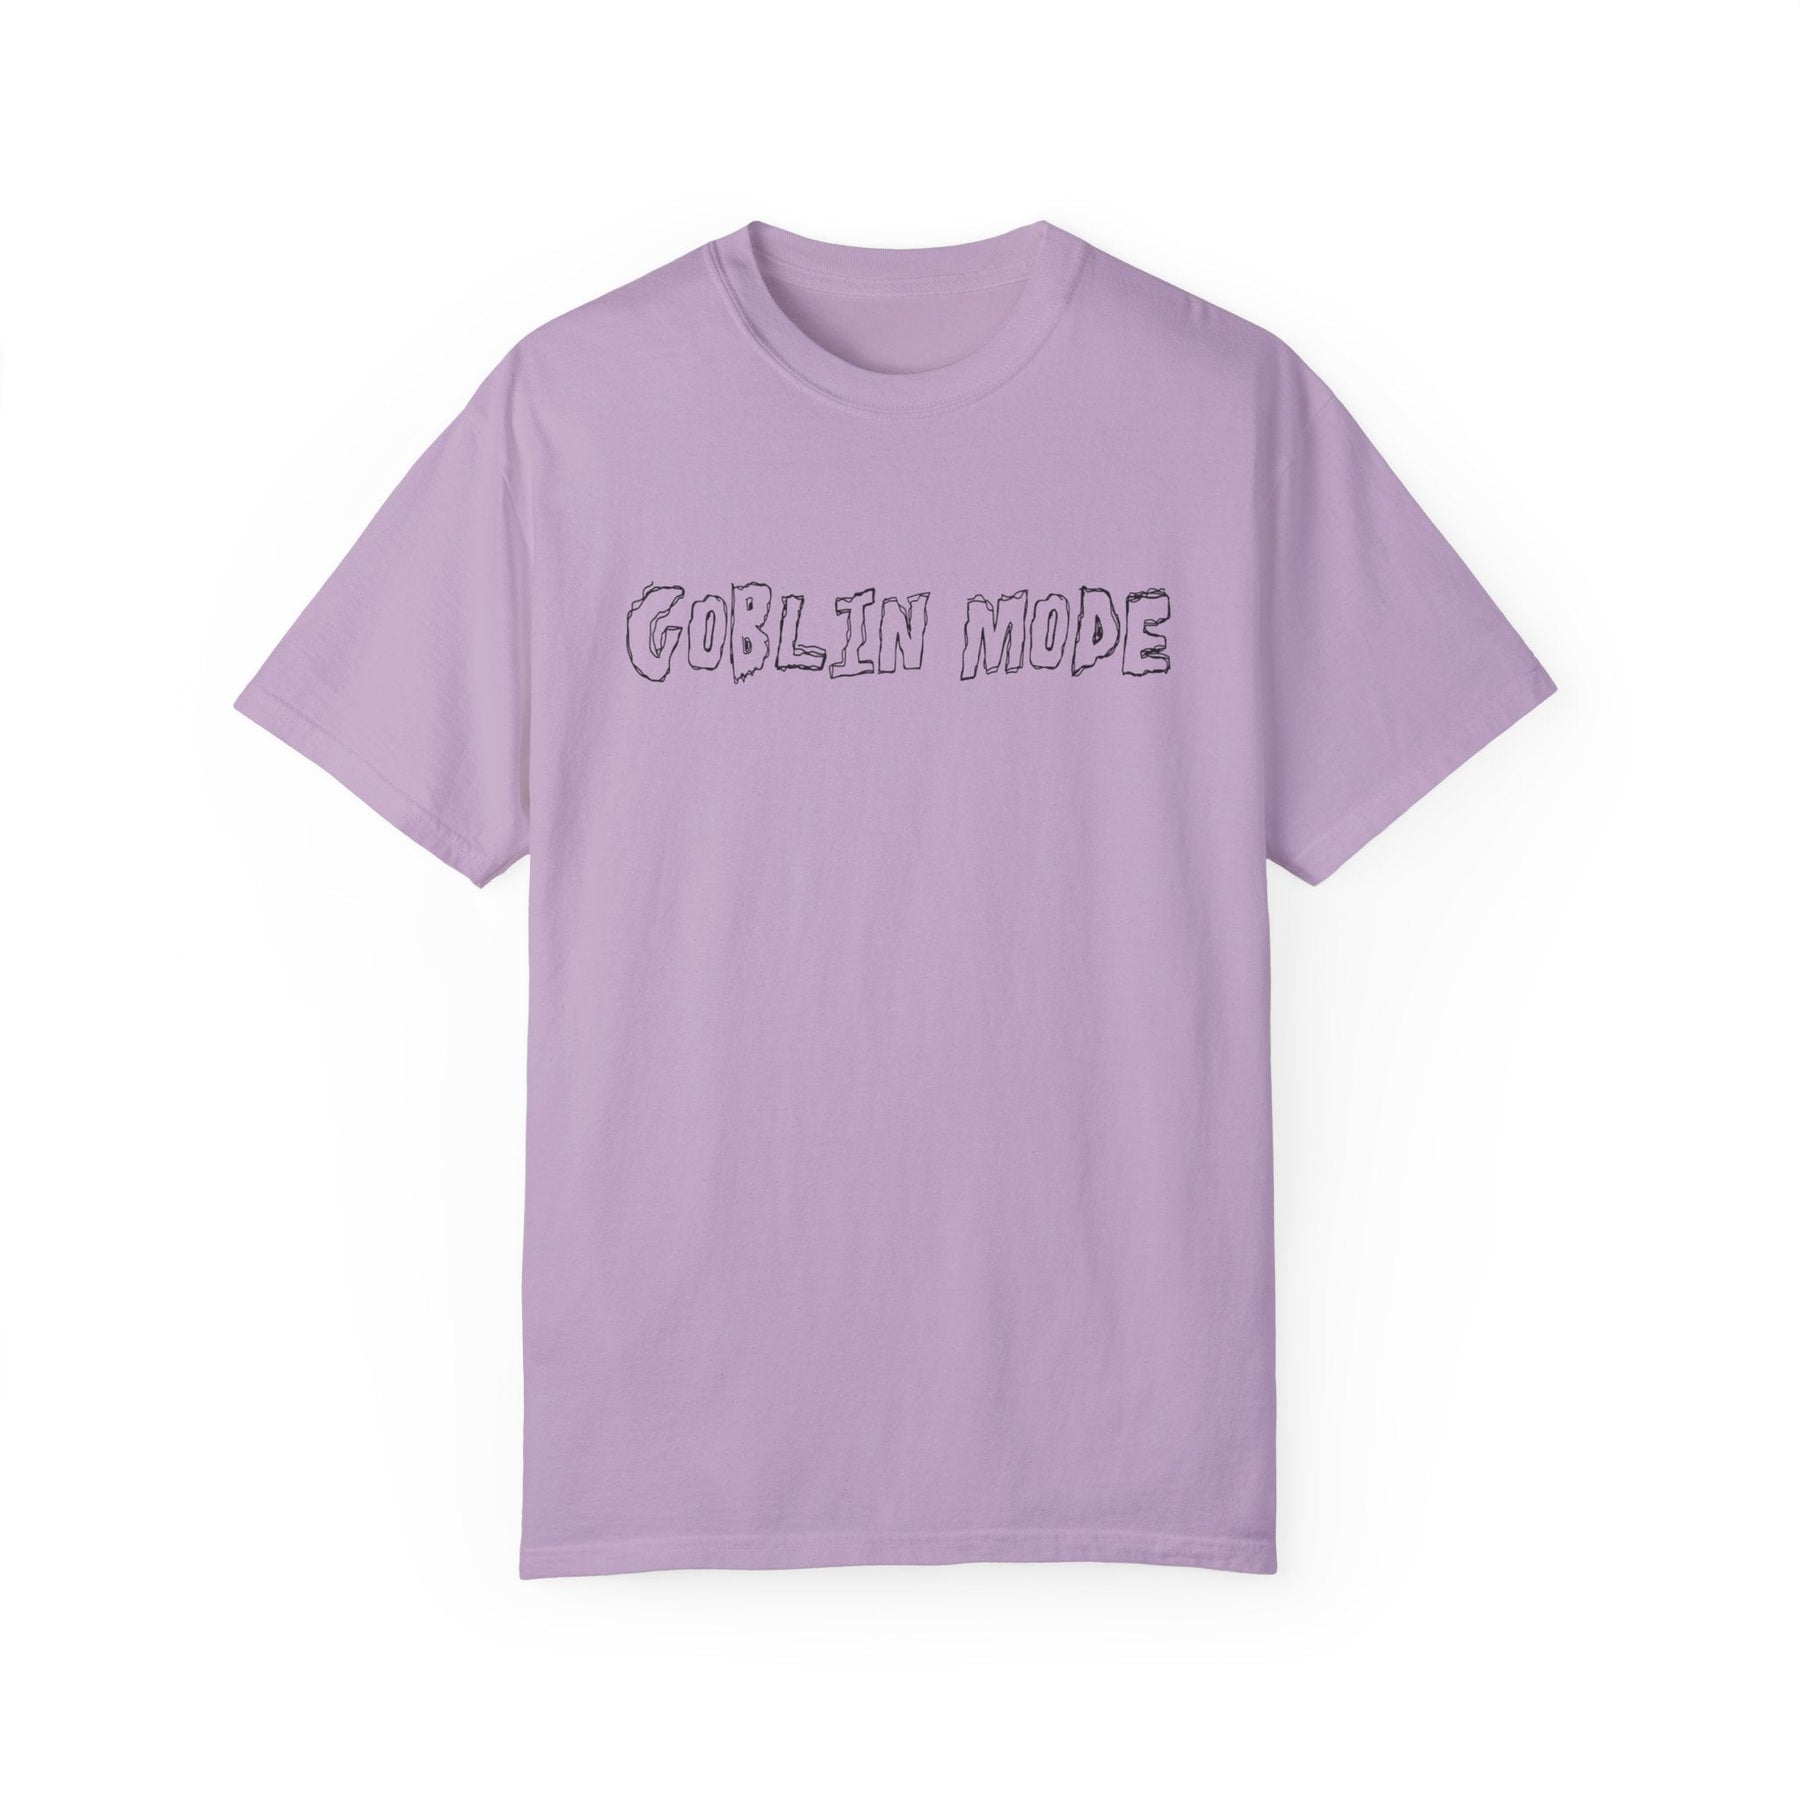 Goblin Mode Comfy Tee - Goth Cloth Co.T - Shirt16024077302133345374